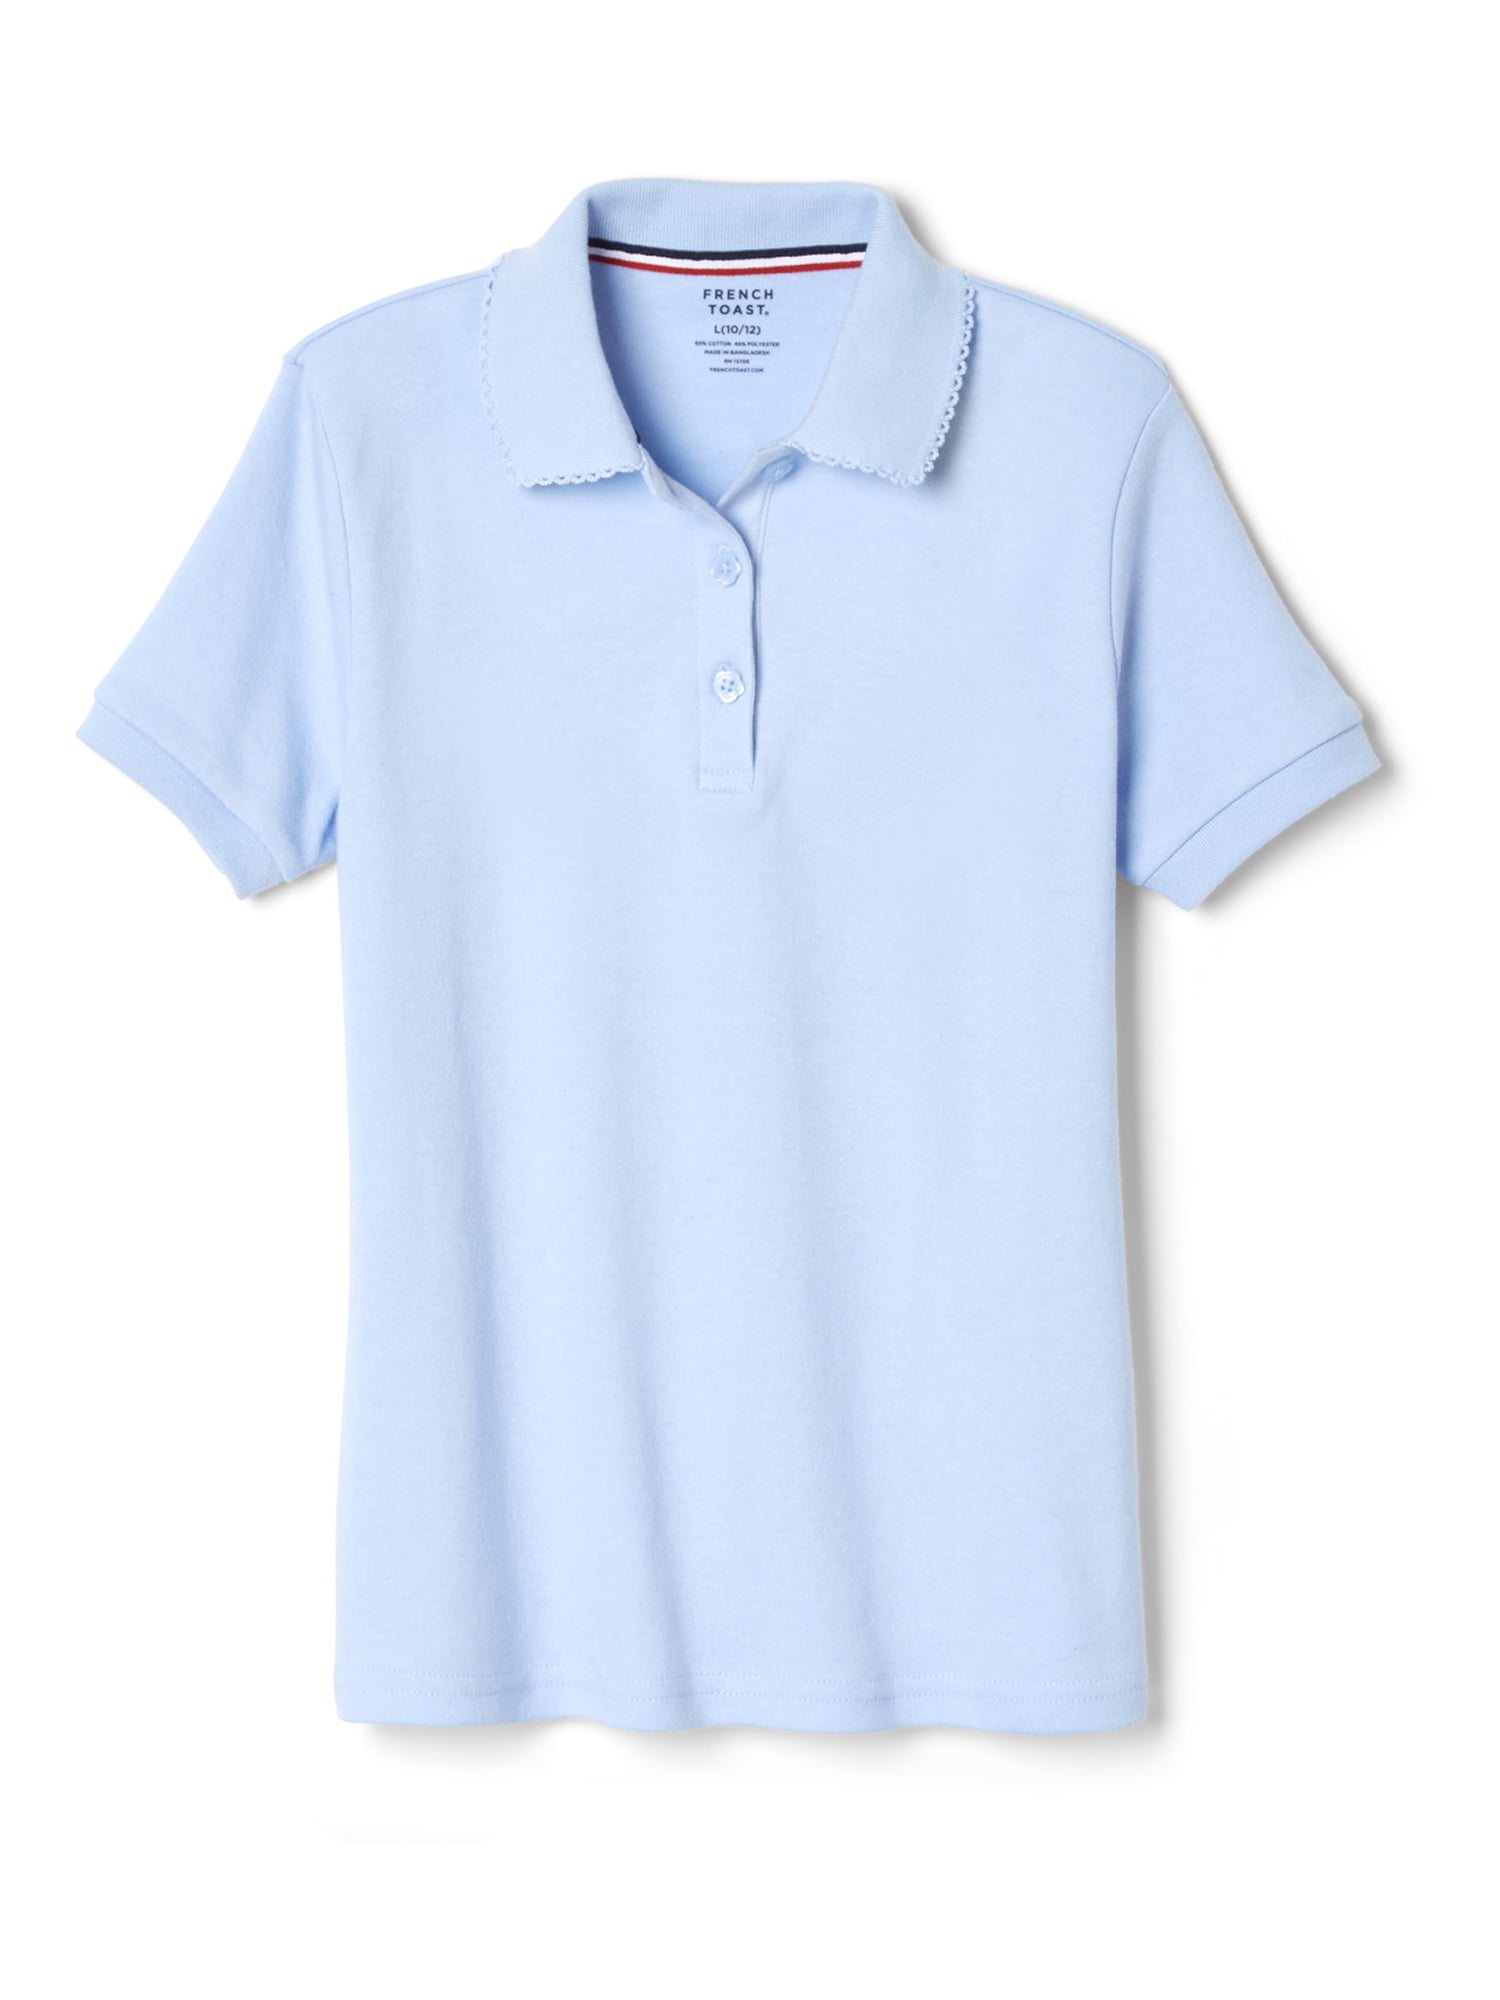 French Toast Toddler Unisex Short Sleeve Navy Pique Knit Polo Shirt 